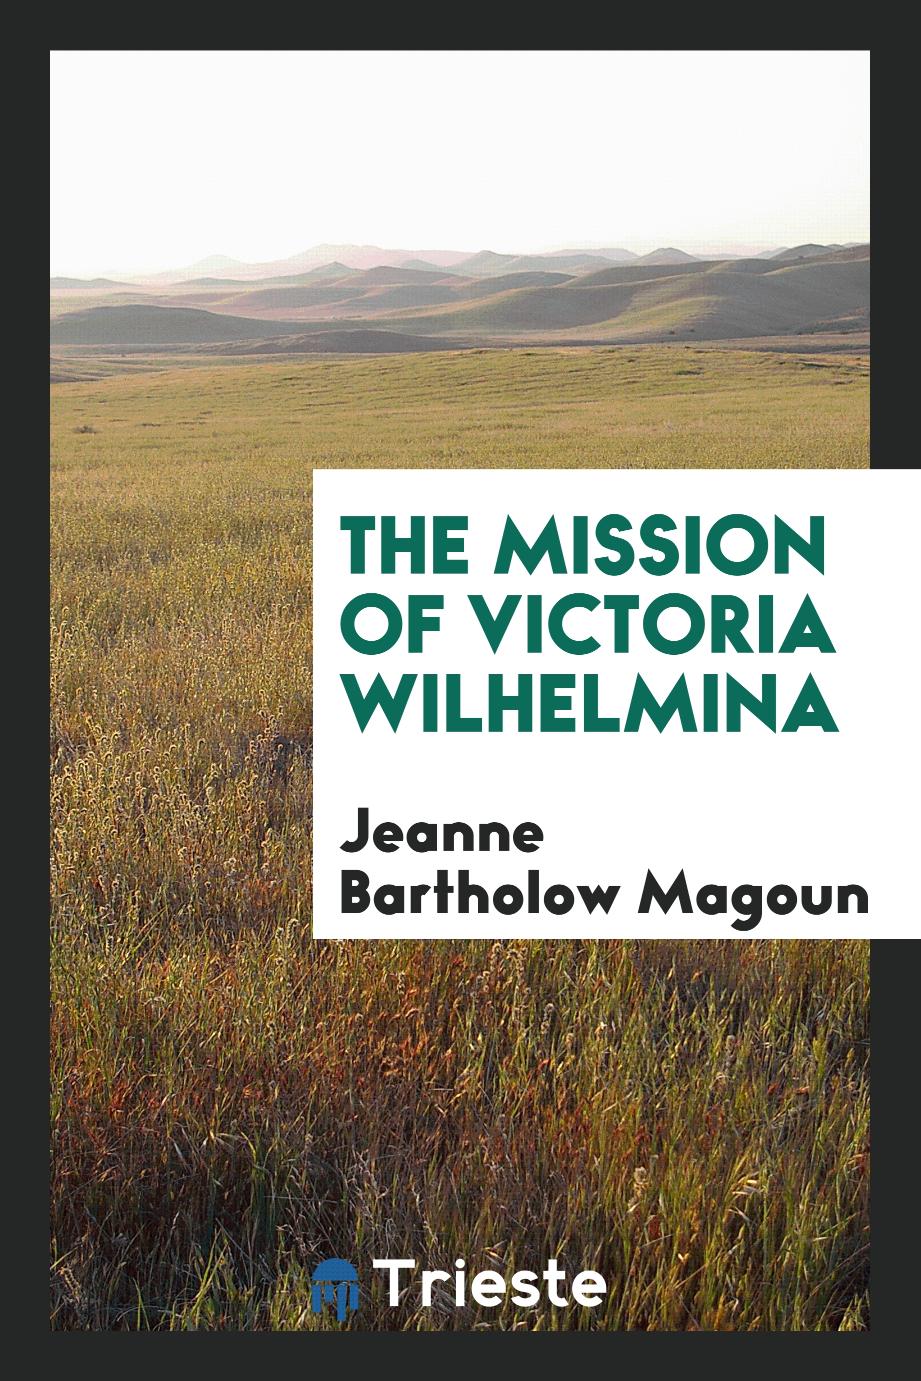 The Mission of Victoria Wilhelmina